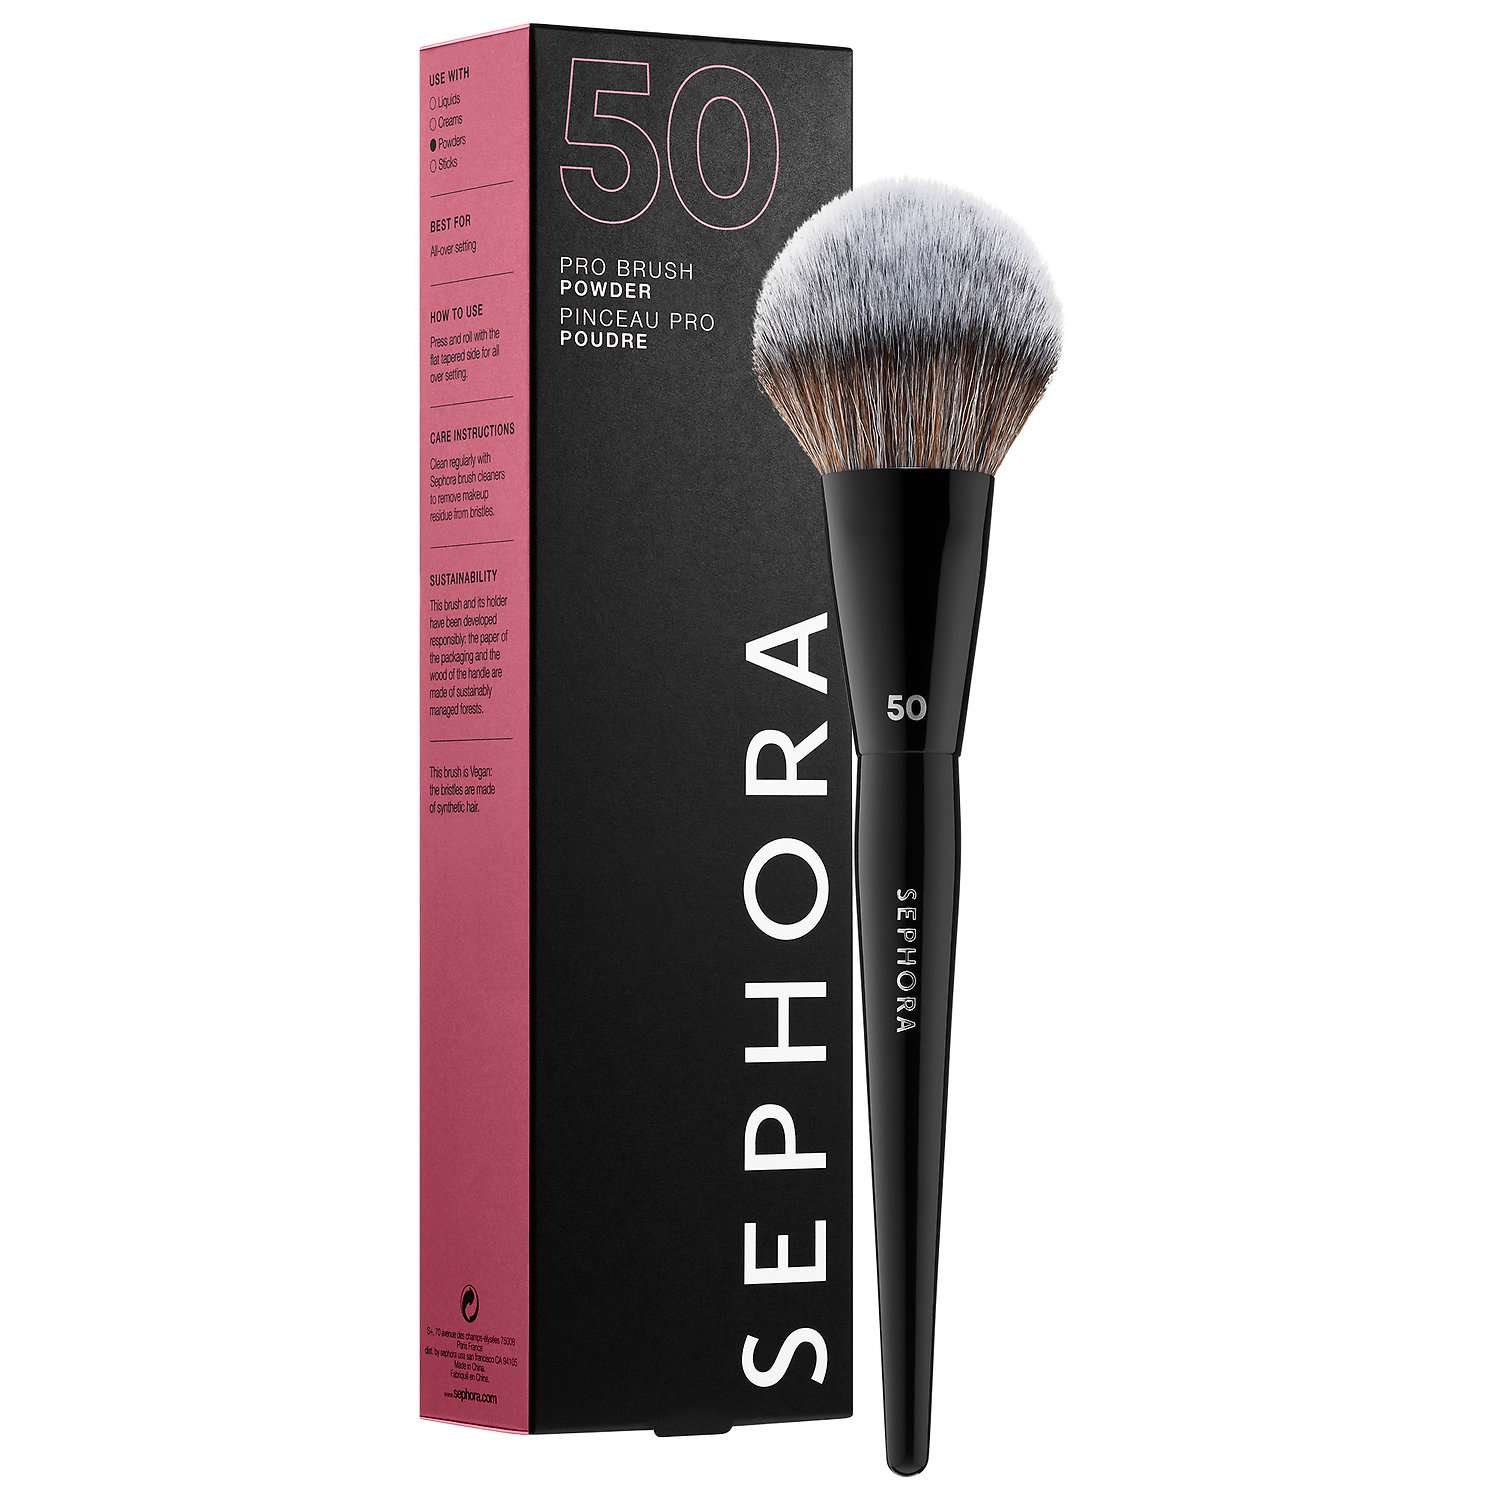 Blush Brush,Sephora Collection Pro Powder Brush #50